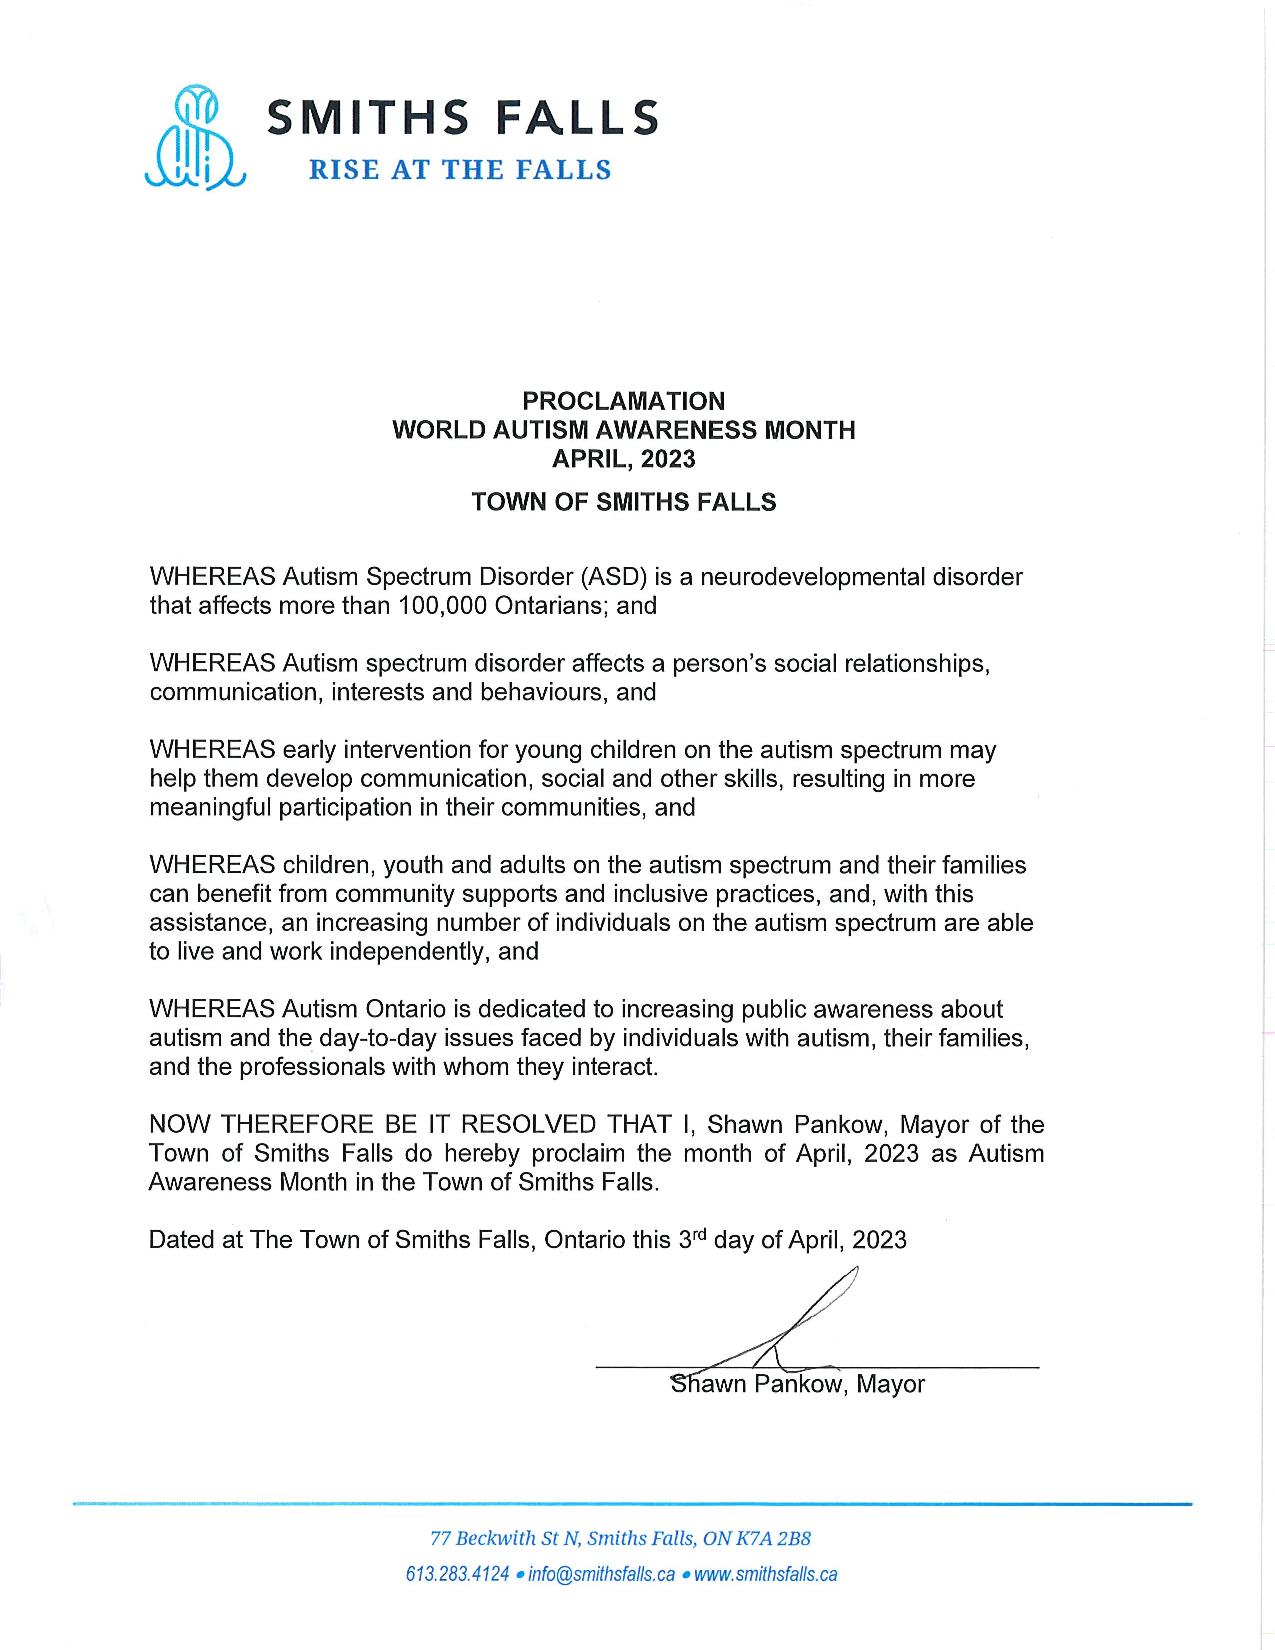 Mayor Pankow Proclamation of World Autism Awareness Month